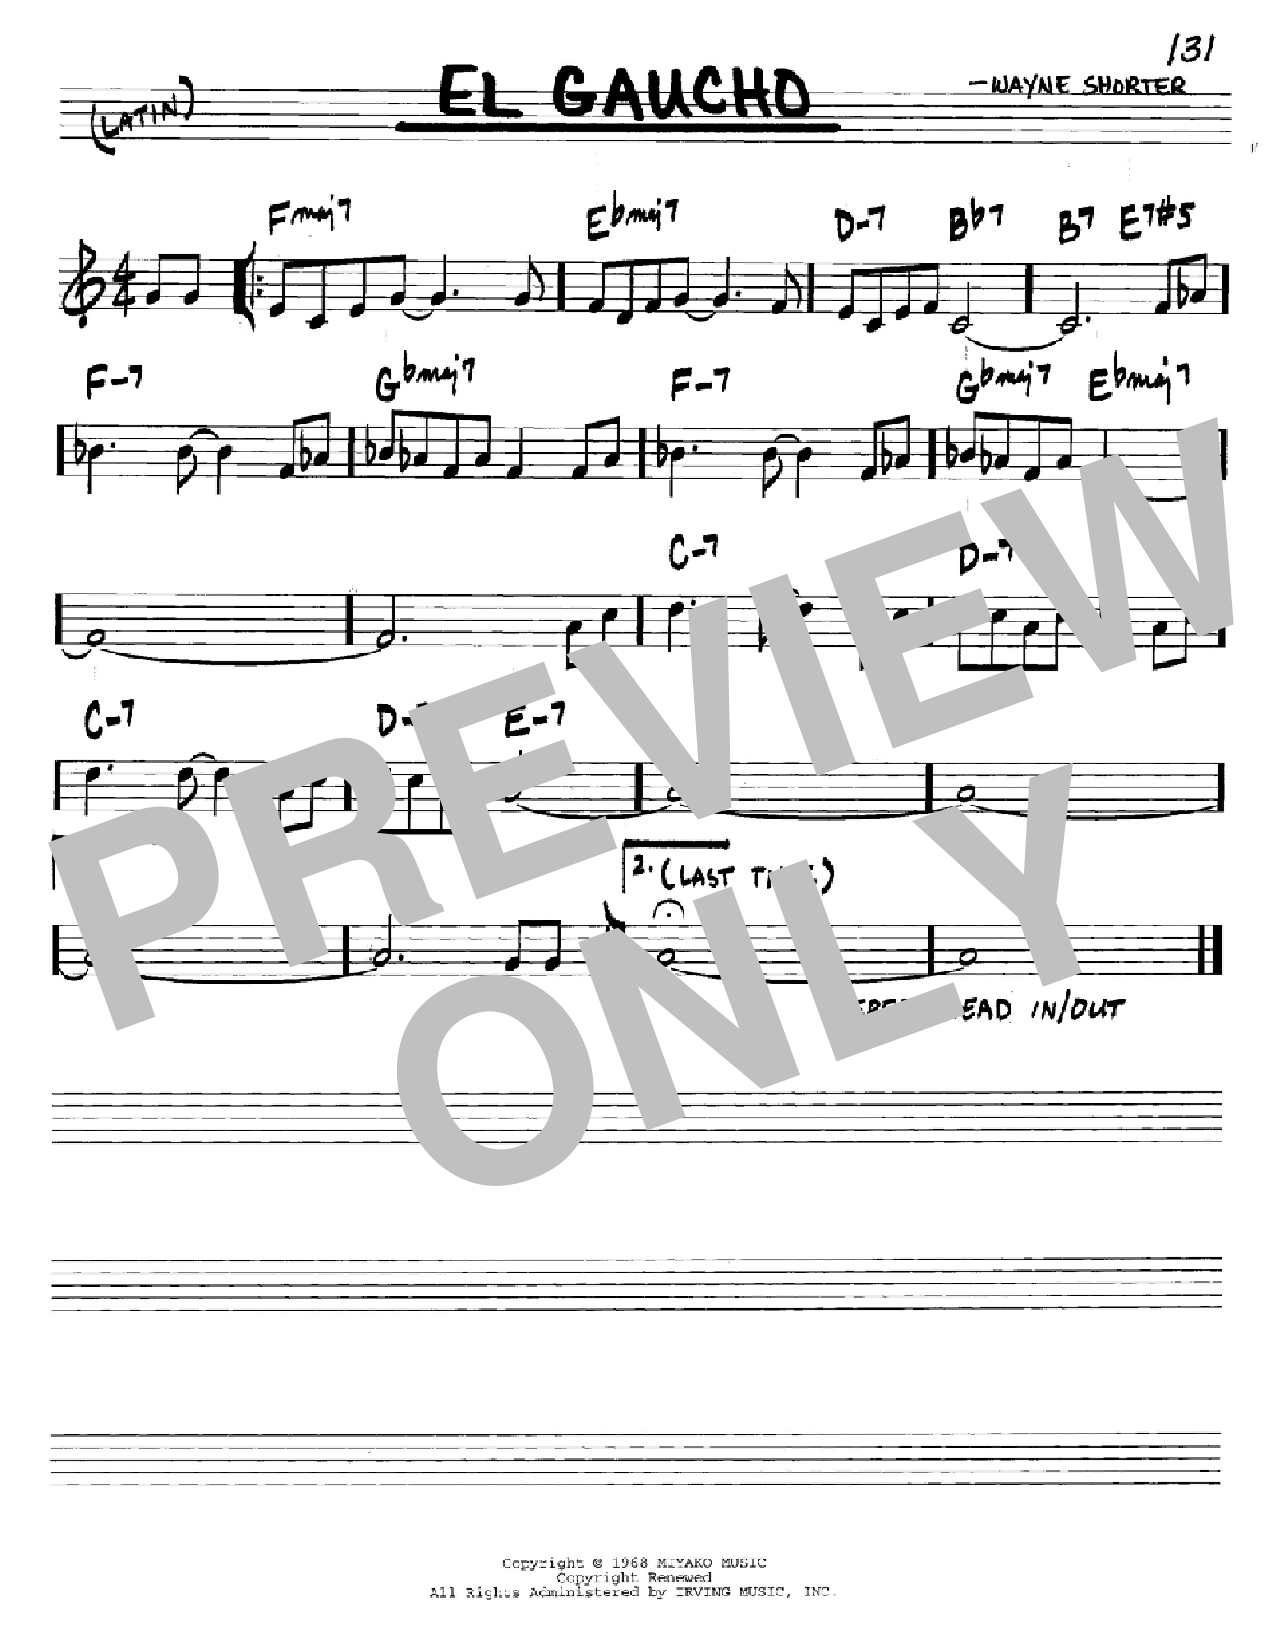 Wayne Shorter El Gaucho Sheet Music Notes & Chords for Real Book - Melody & Chords - Bb Instruments - Download or Print PDF